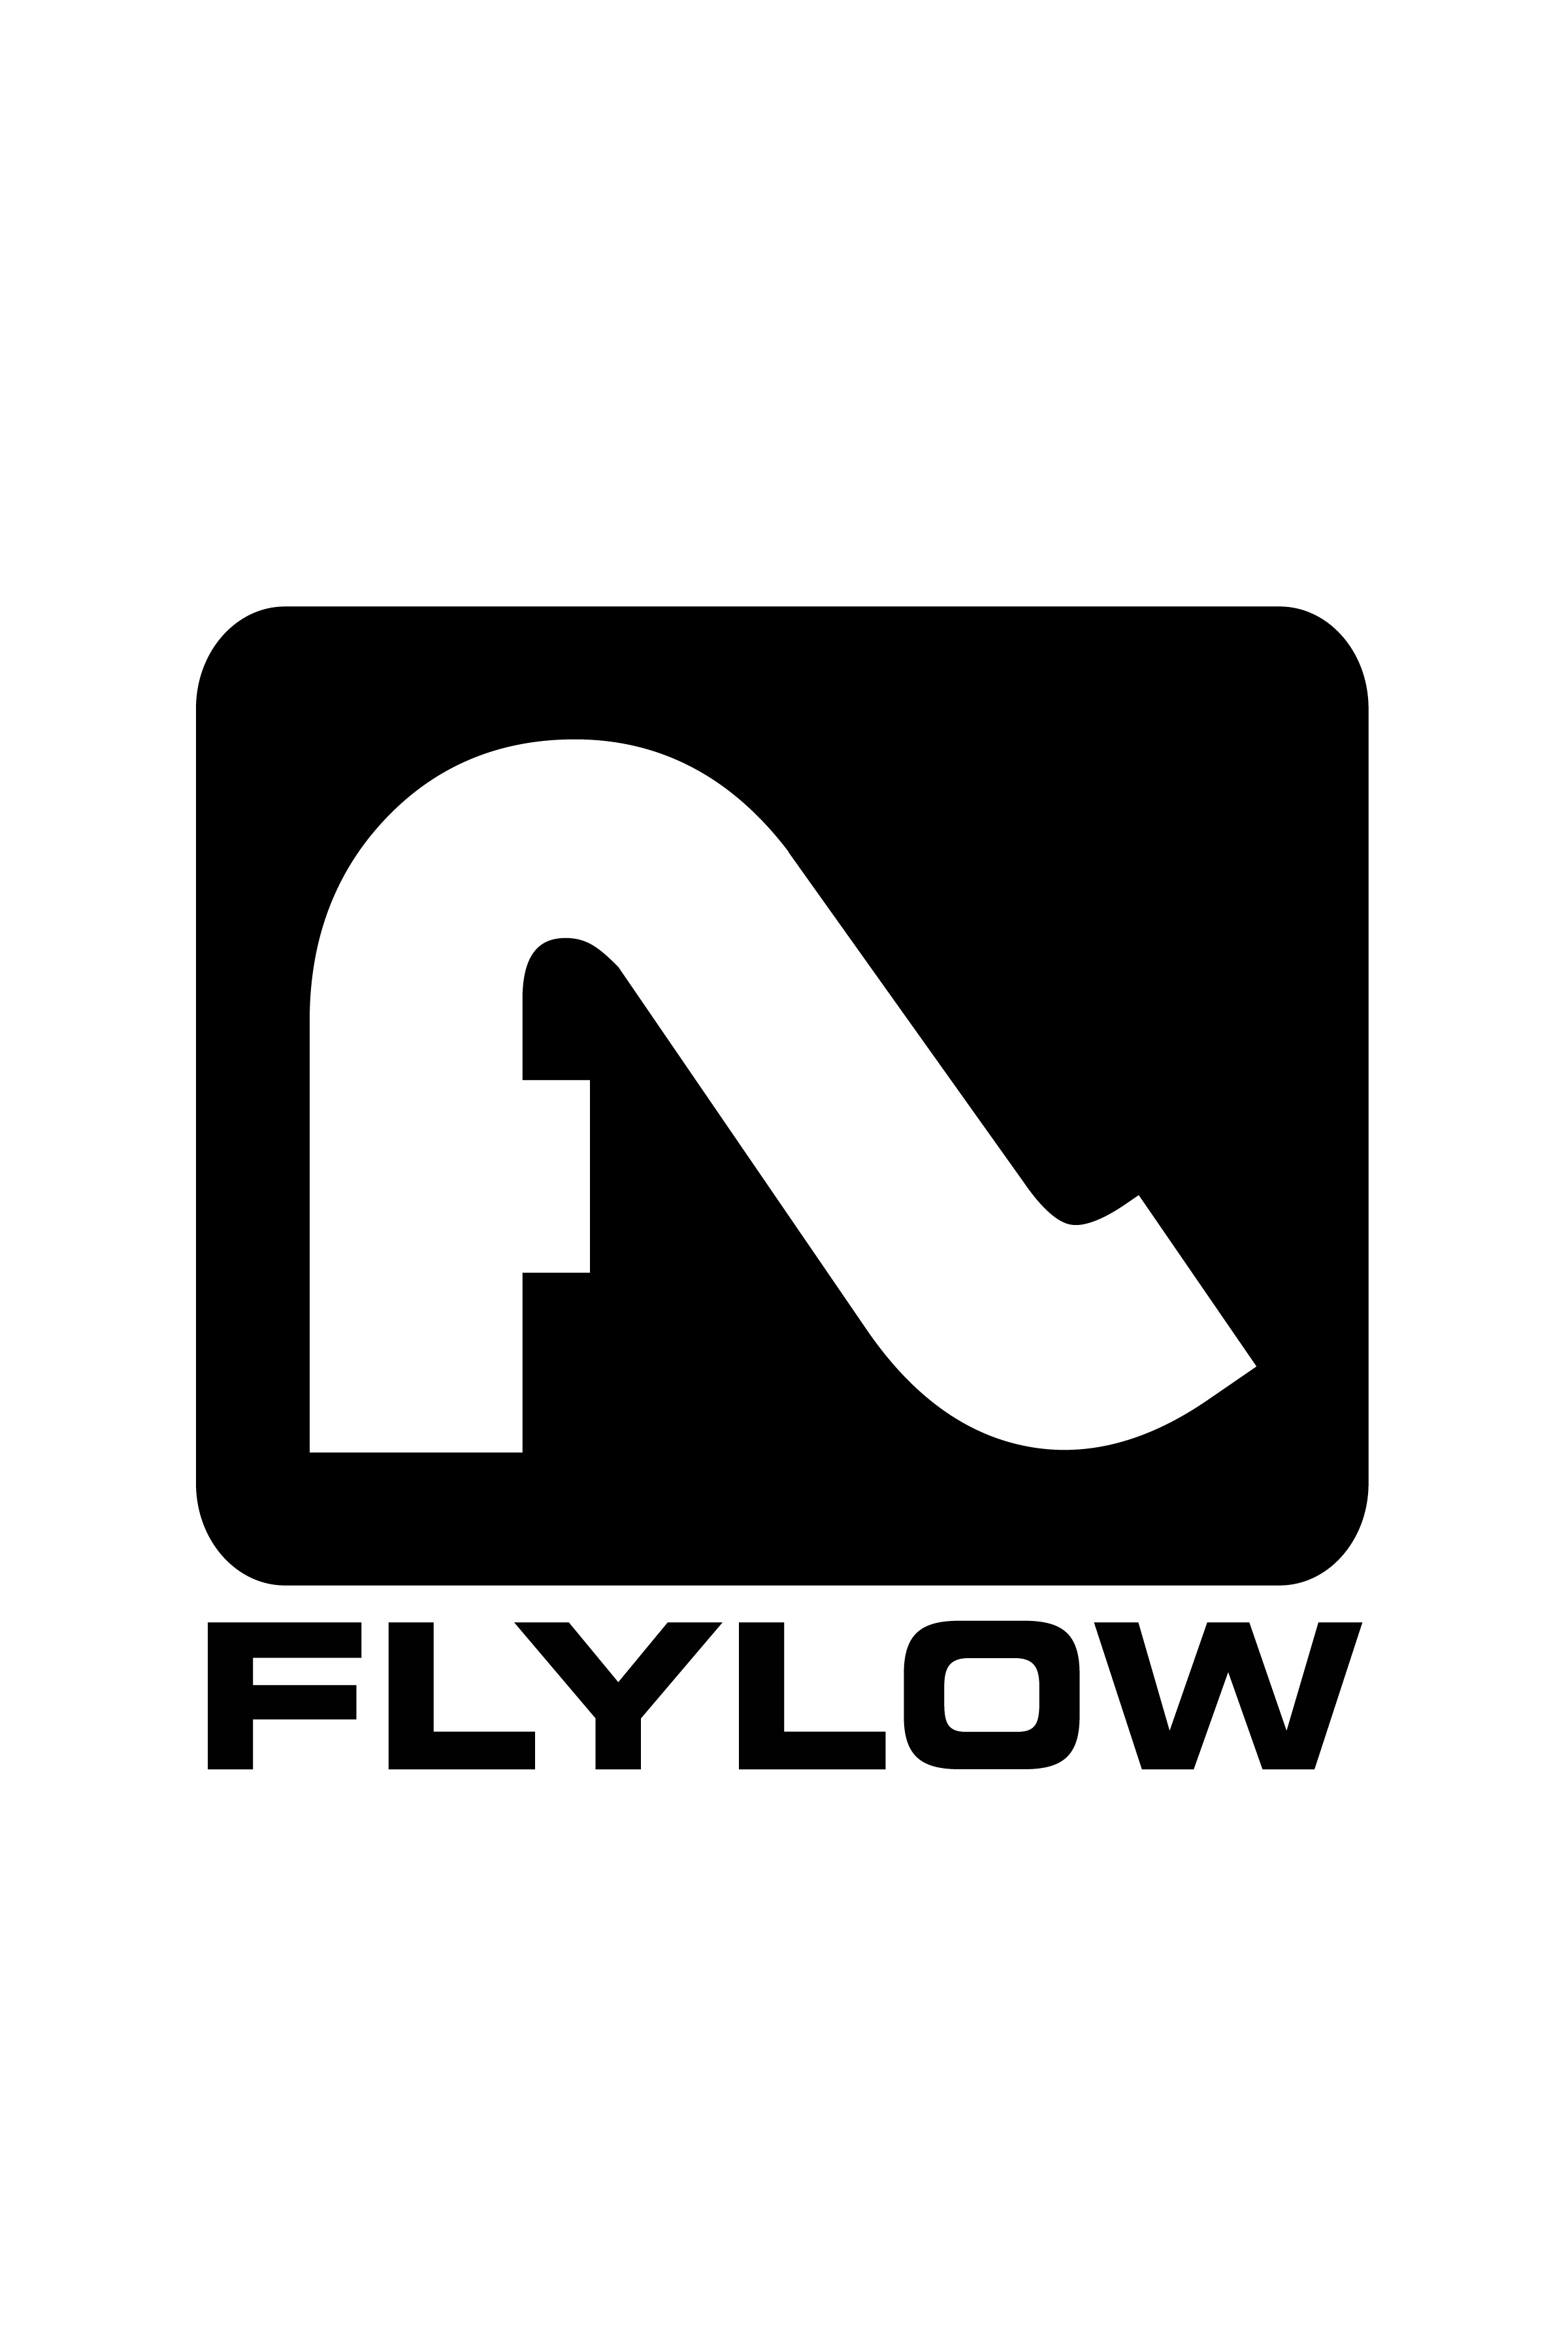 The FlyLow Logo 6.21.11 (2)